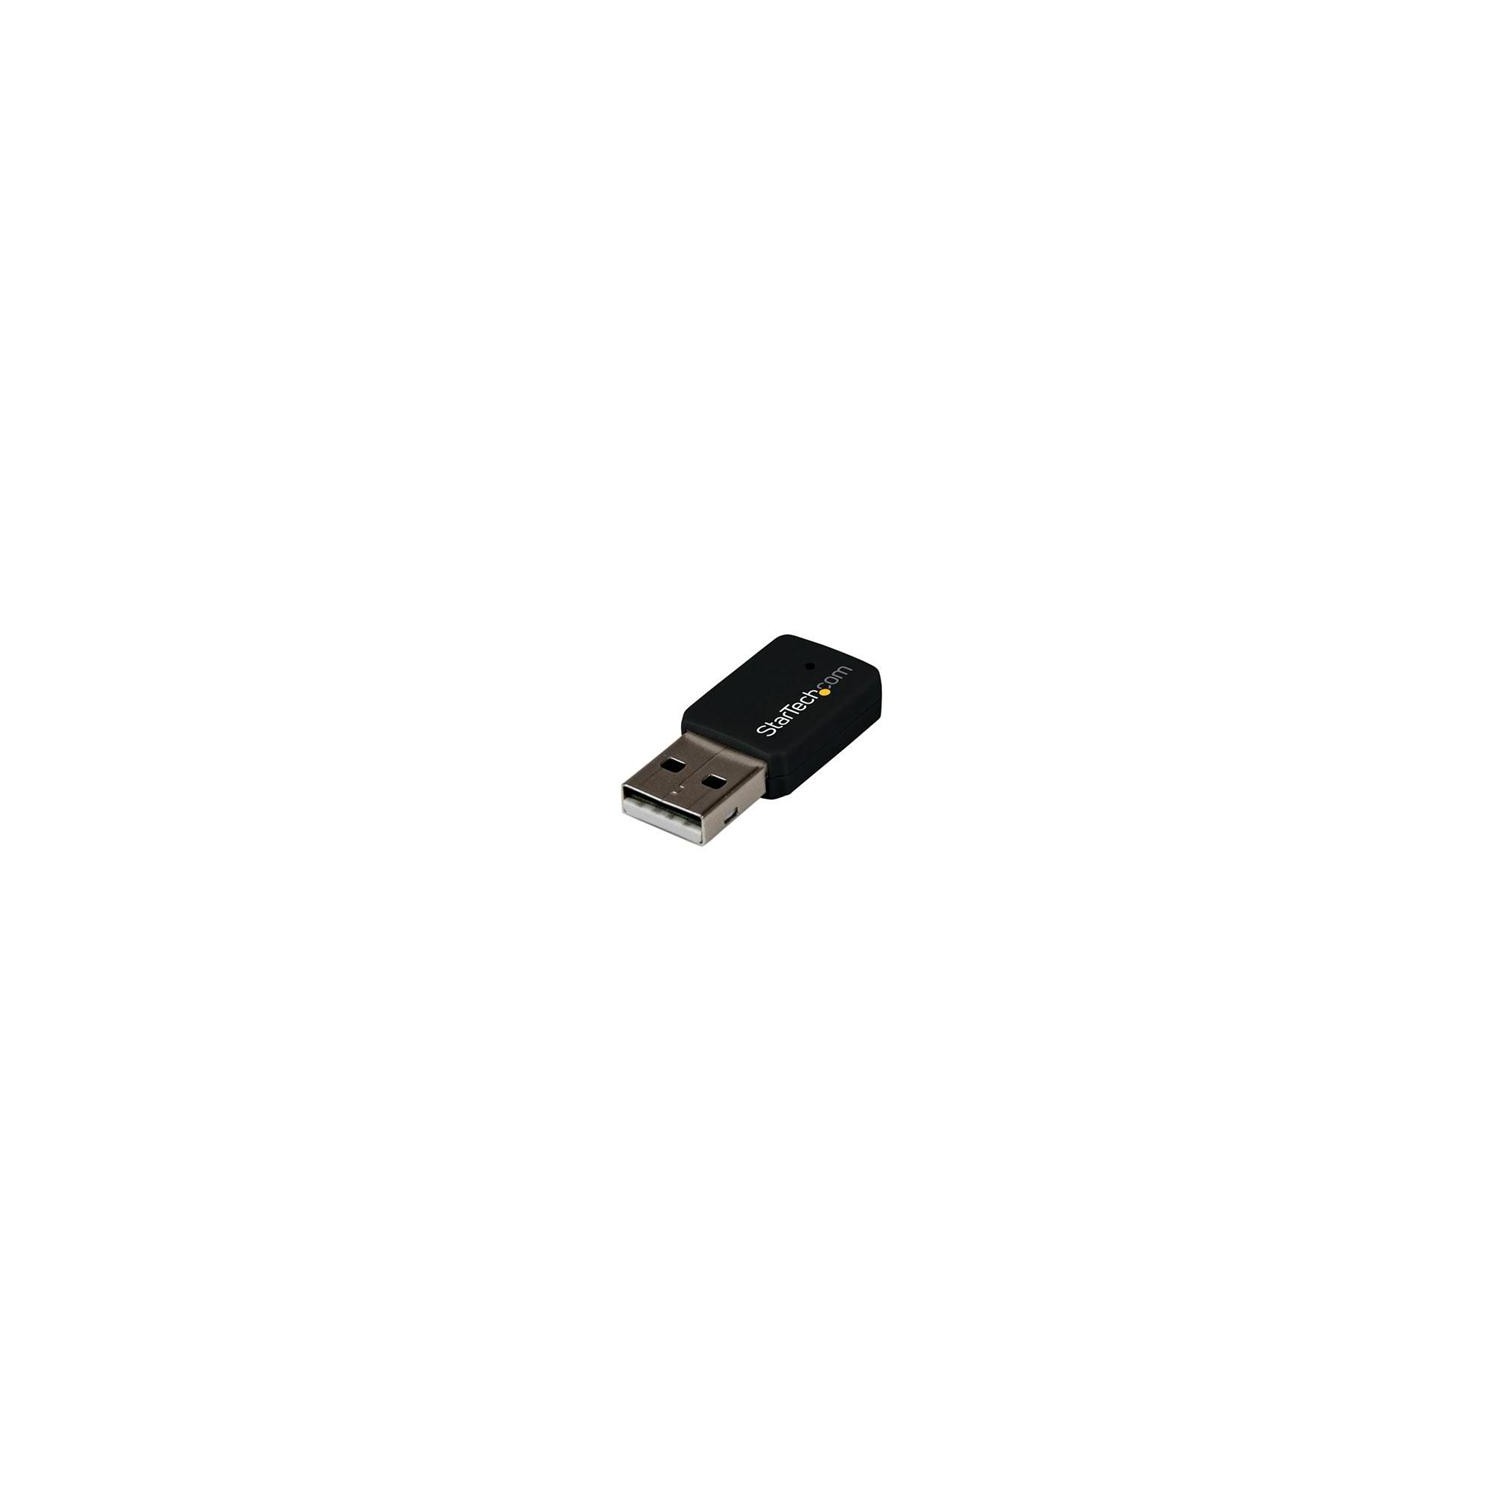 STARTECH ADD DUAL-BAND WIRELESS-AC CONNECTIVITY TO A DESKTOP OR LAPTOP COMPUTER THROUGH USB 2.0 USB 2.0 AC600 MINI DUAL